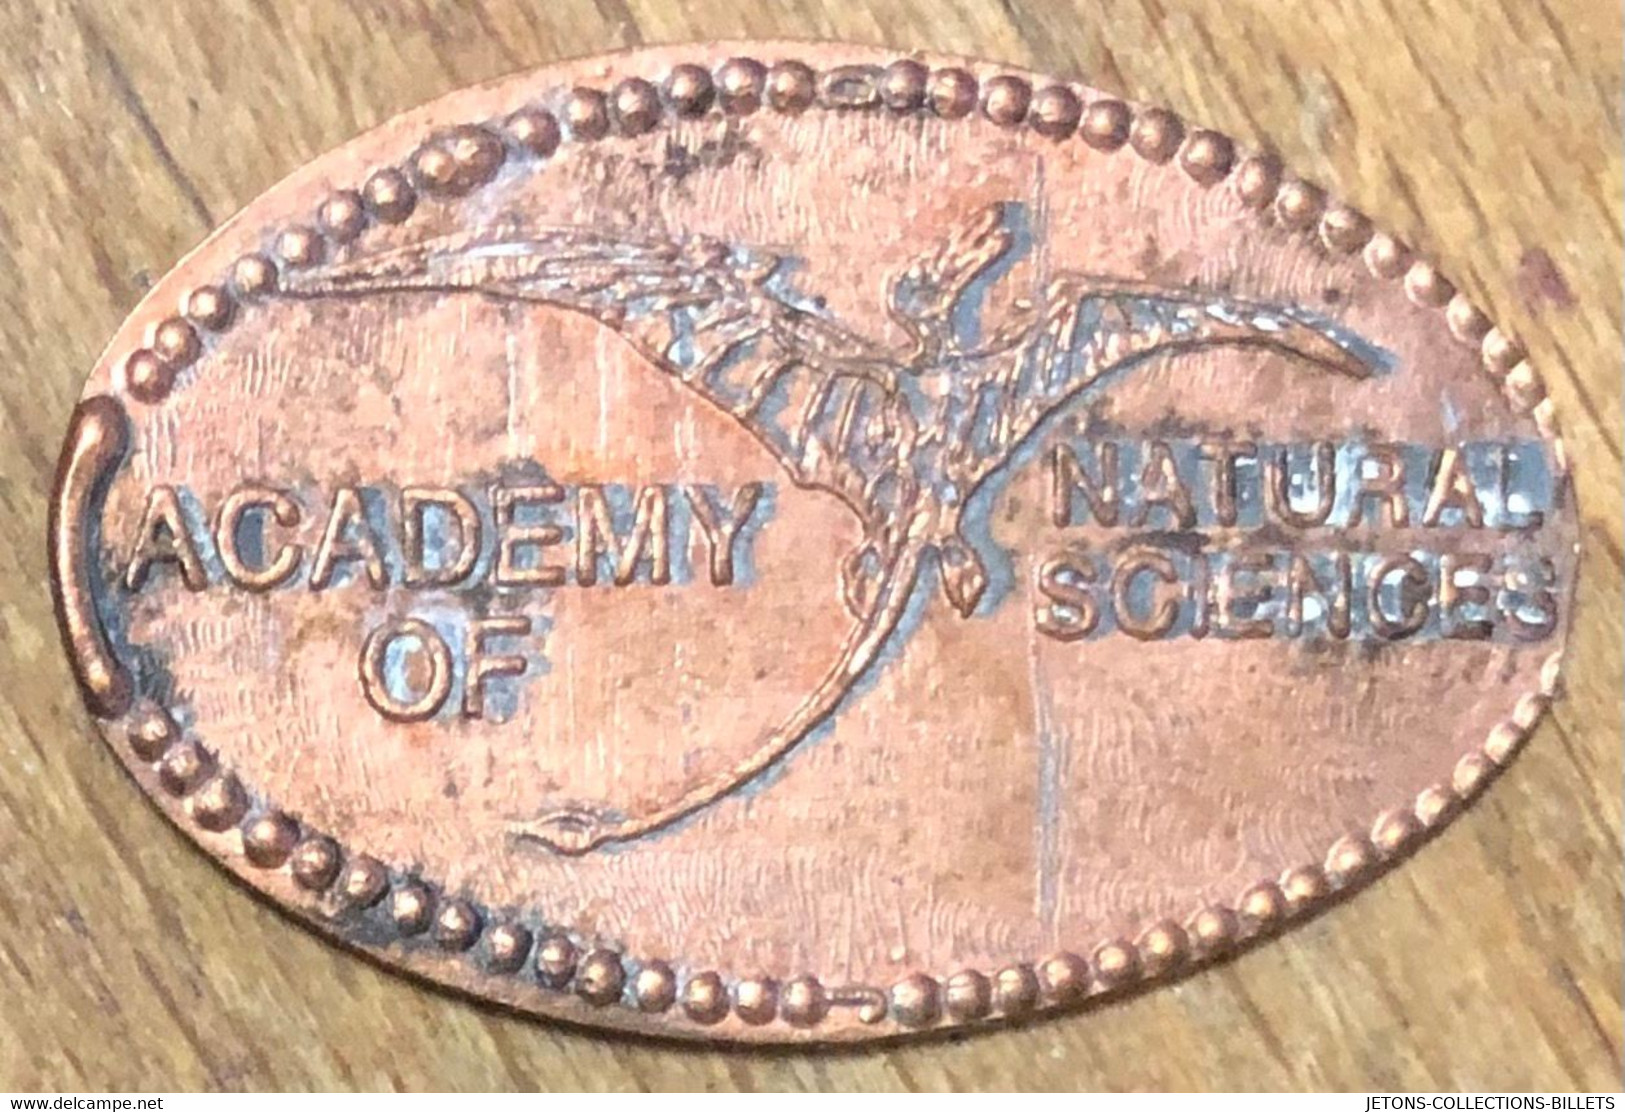 ÉTATS-UNIS USA ACADEMY OF NATURAL SCIENCES PIÈCE ÉCRASÉE PENNY ELONGATED COIN MEDAILLE TOURISTIQUE MEDALS TOKENS - Monedas Elongadas (elongated Coins)